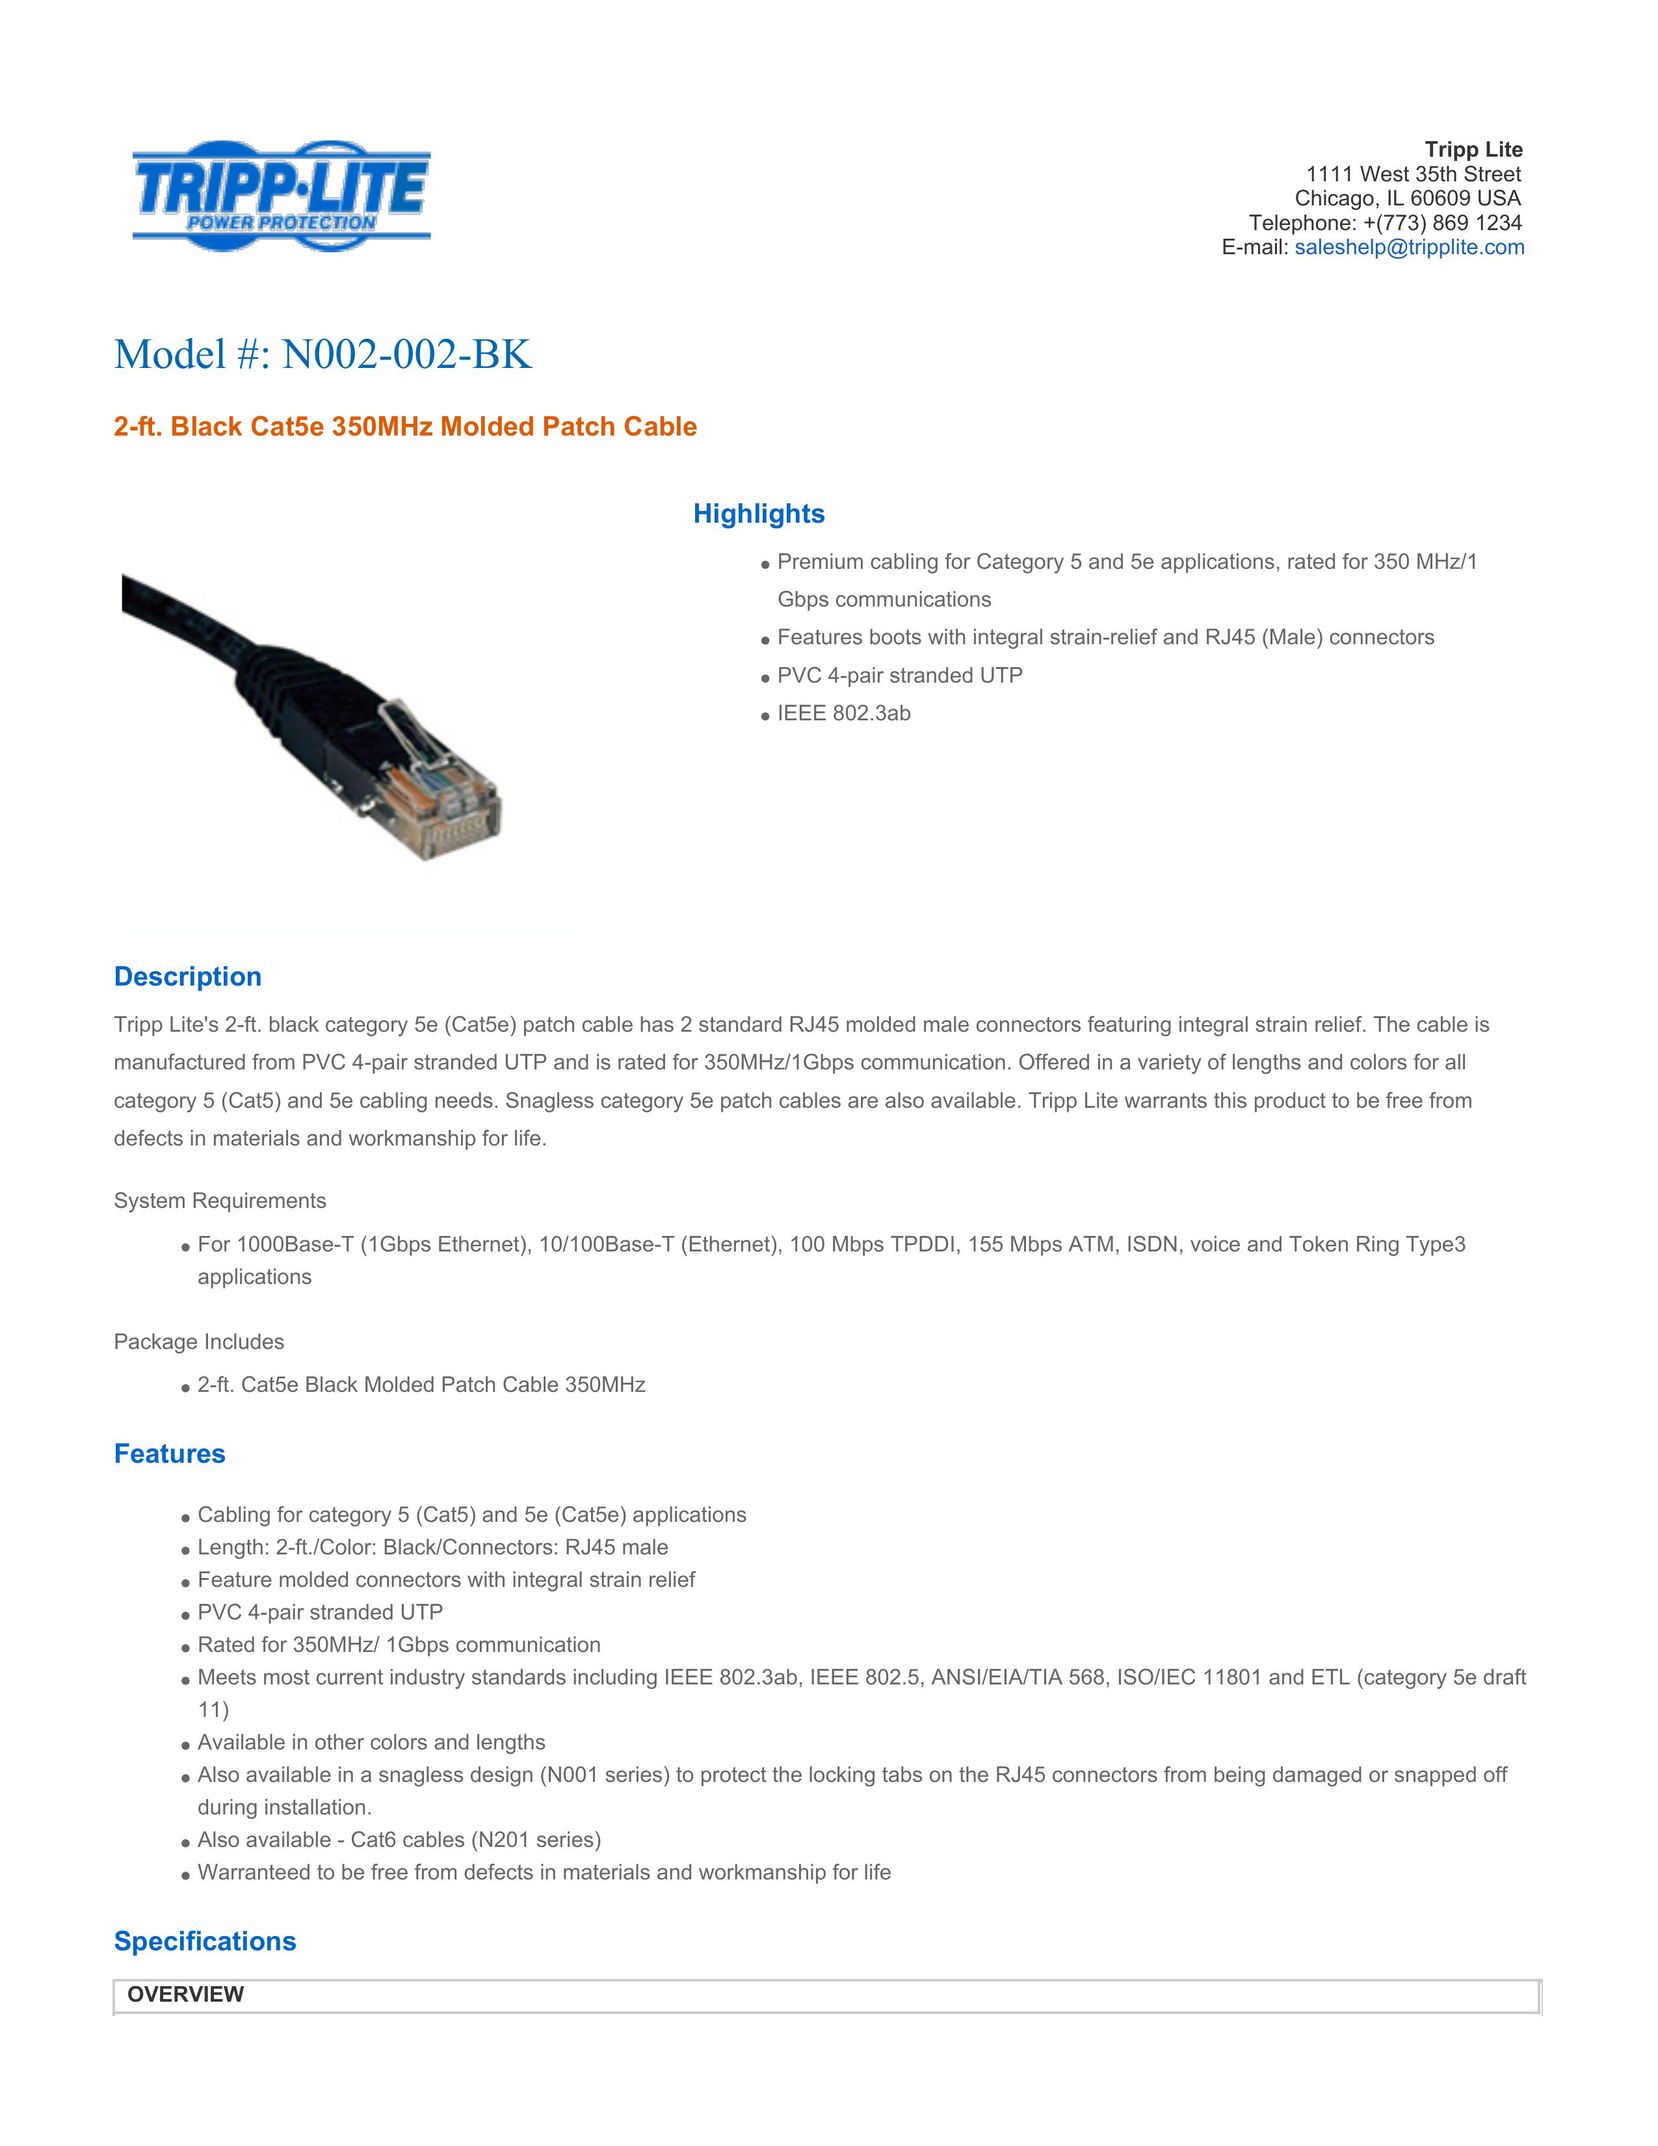 Tripp Lite N002-002-BK Network Cables User Manual